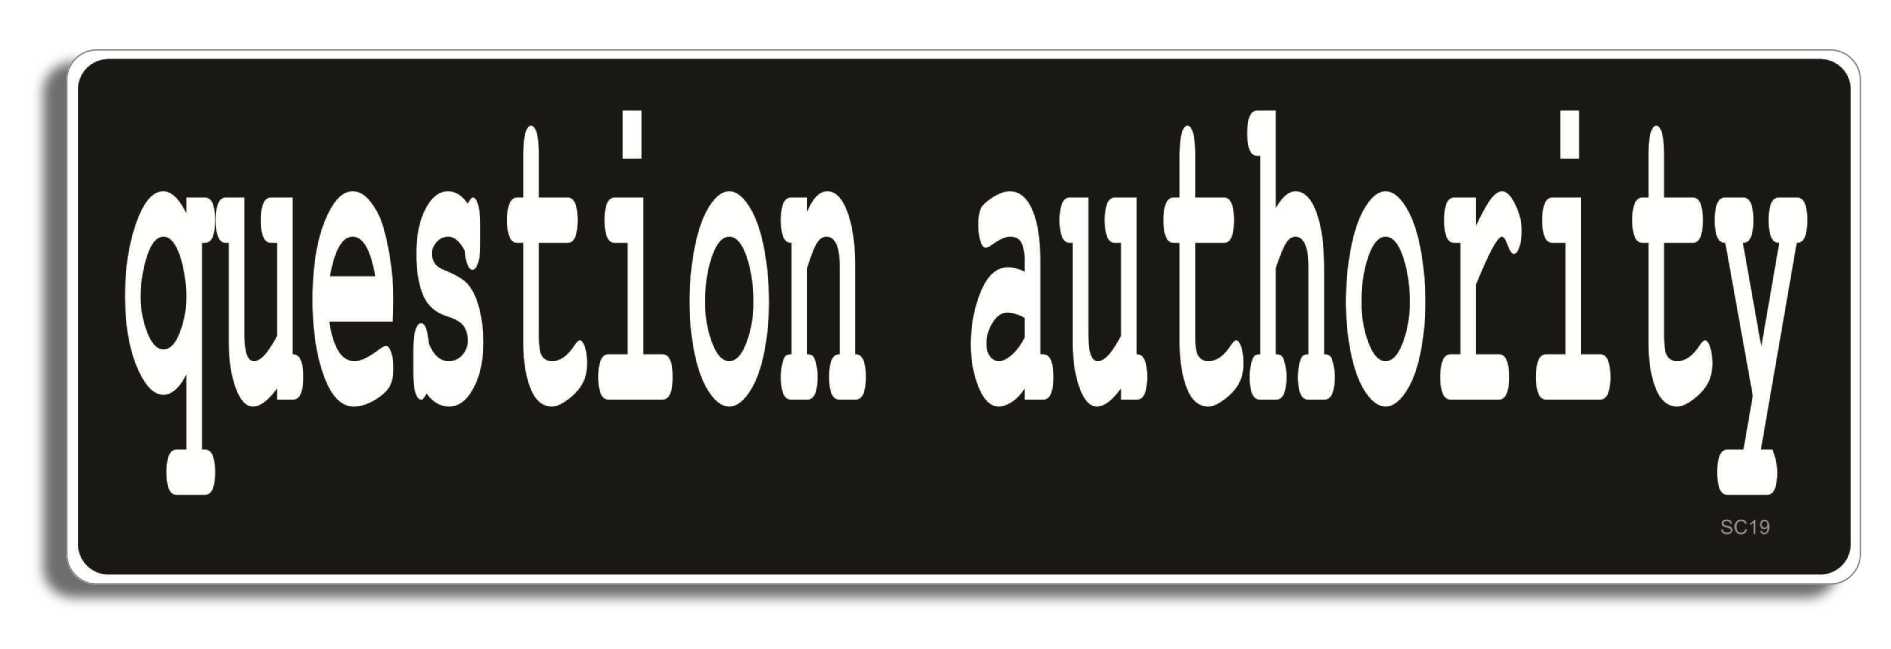 question authority - 3" x 10" Bumper Sticker--Car Magnet- -  Decal Bumper Sticker-political Bumper Sticker Car Magnet question authority-   Decal for carsAnti Government